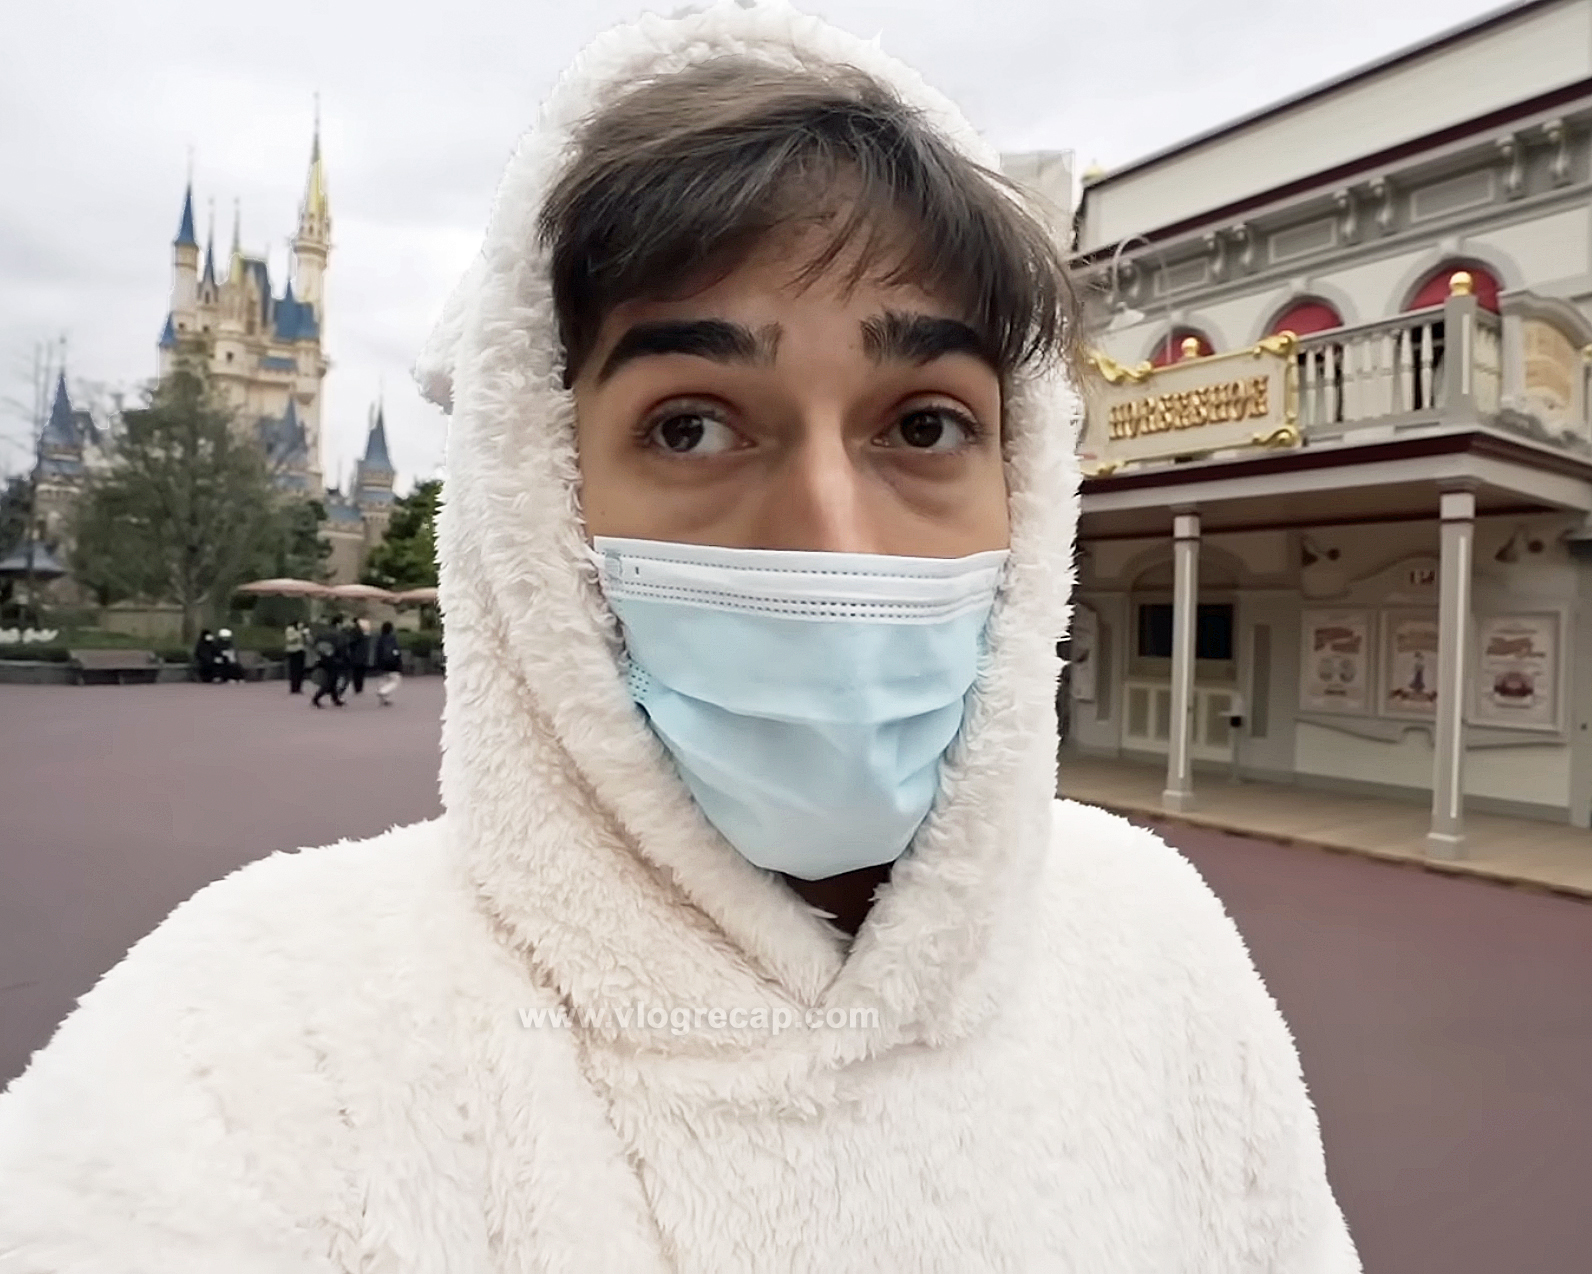 JoJo’s World: Last Day at Tokyo Disneyland